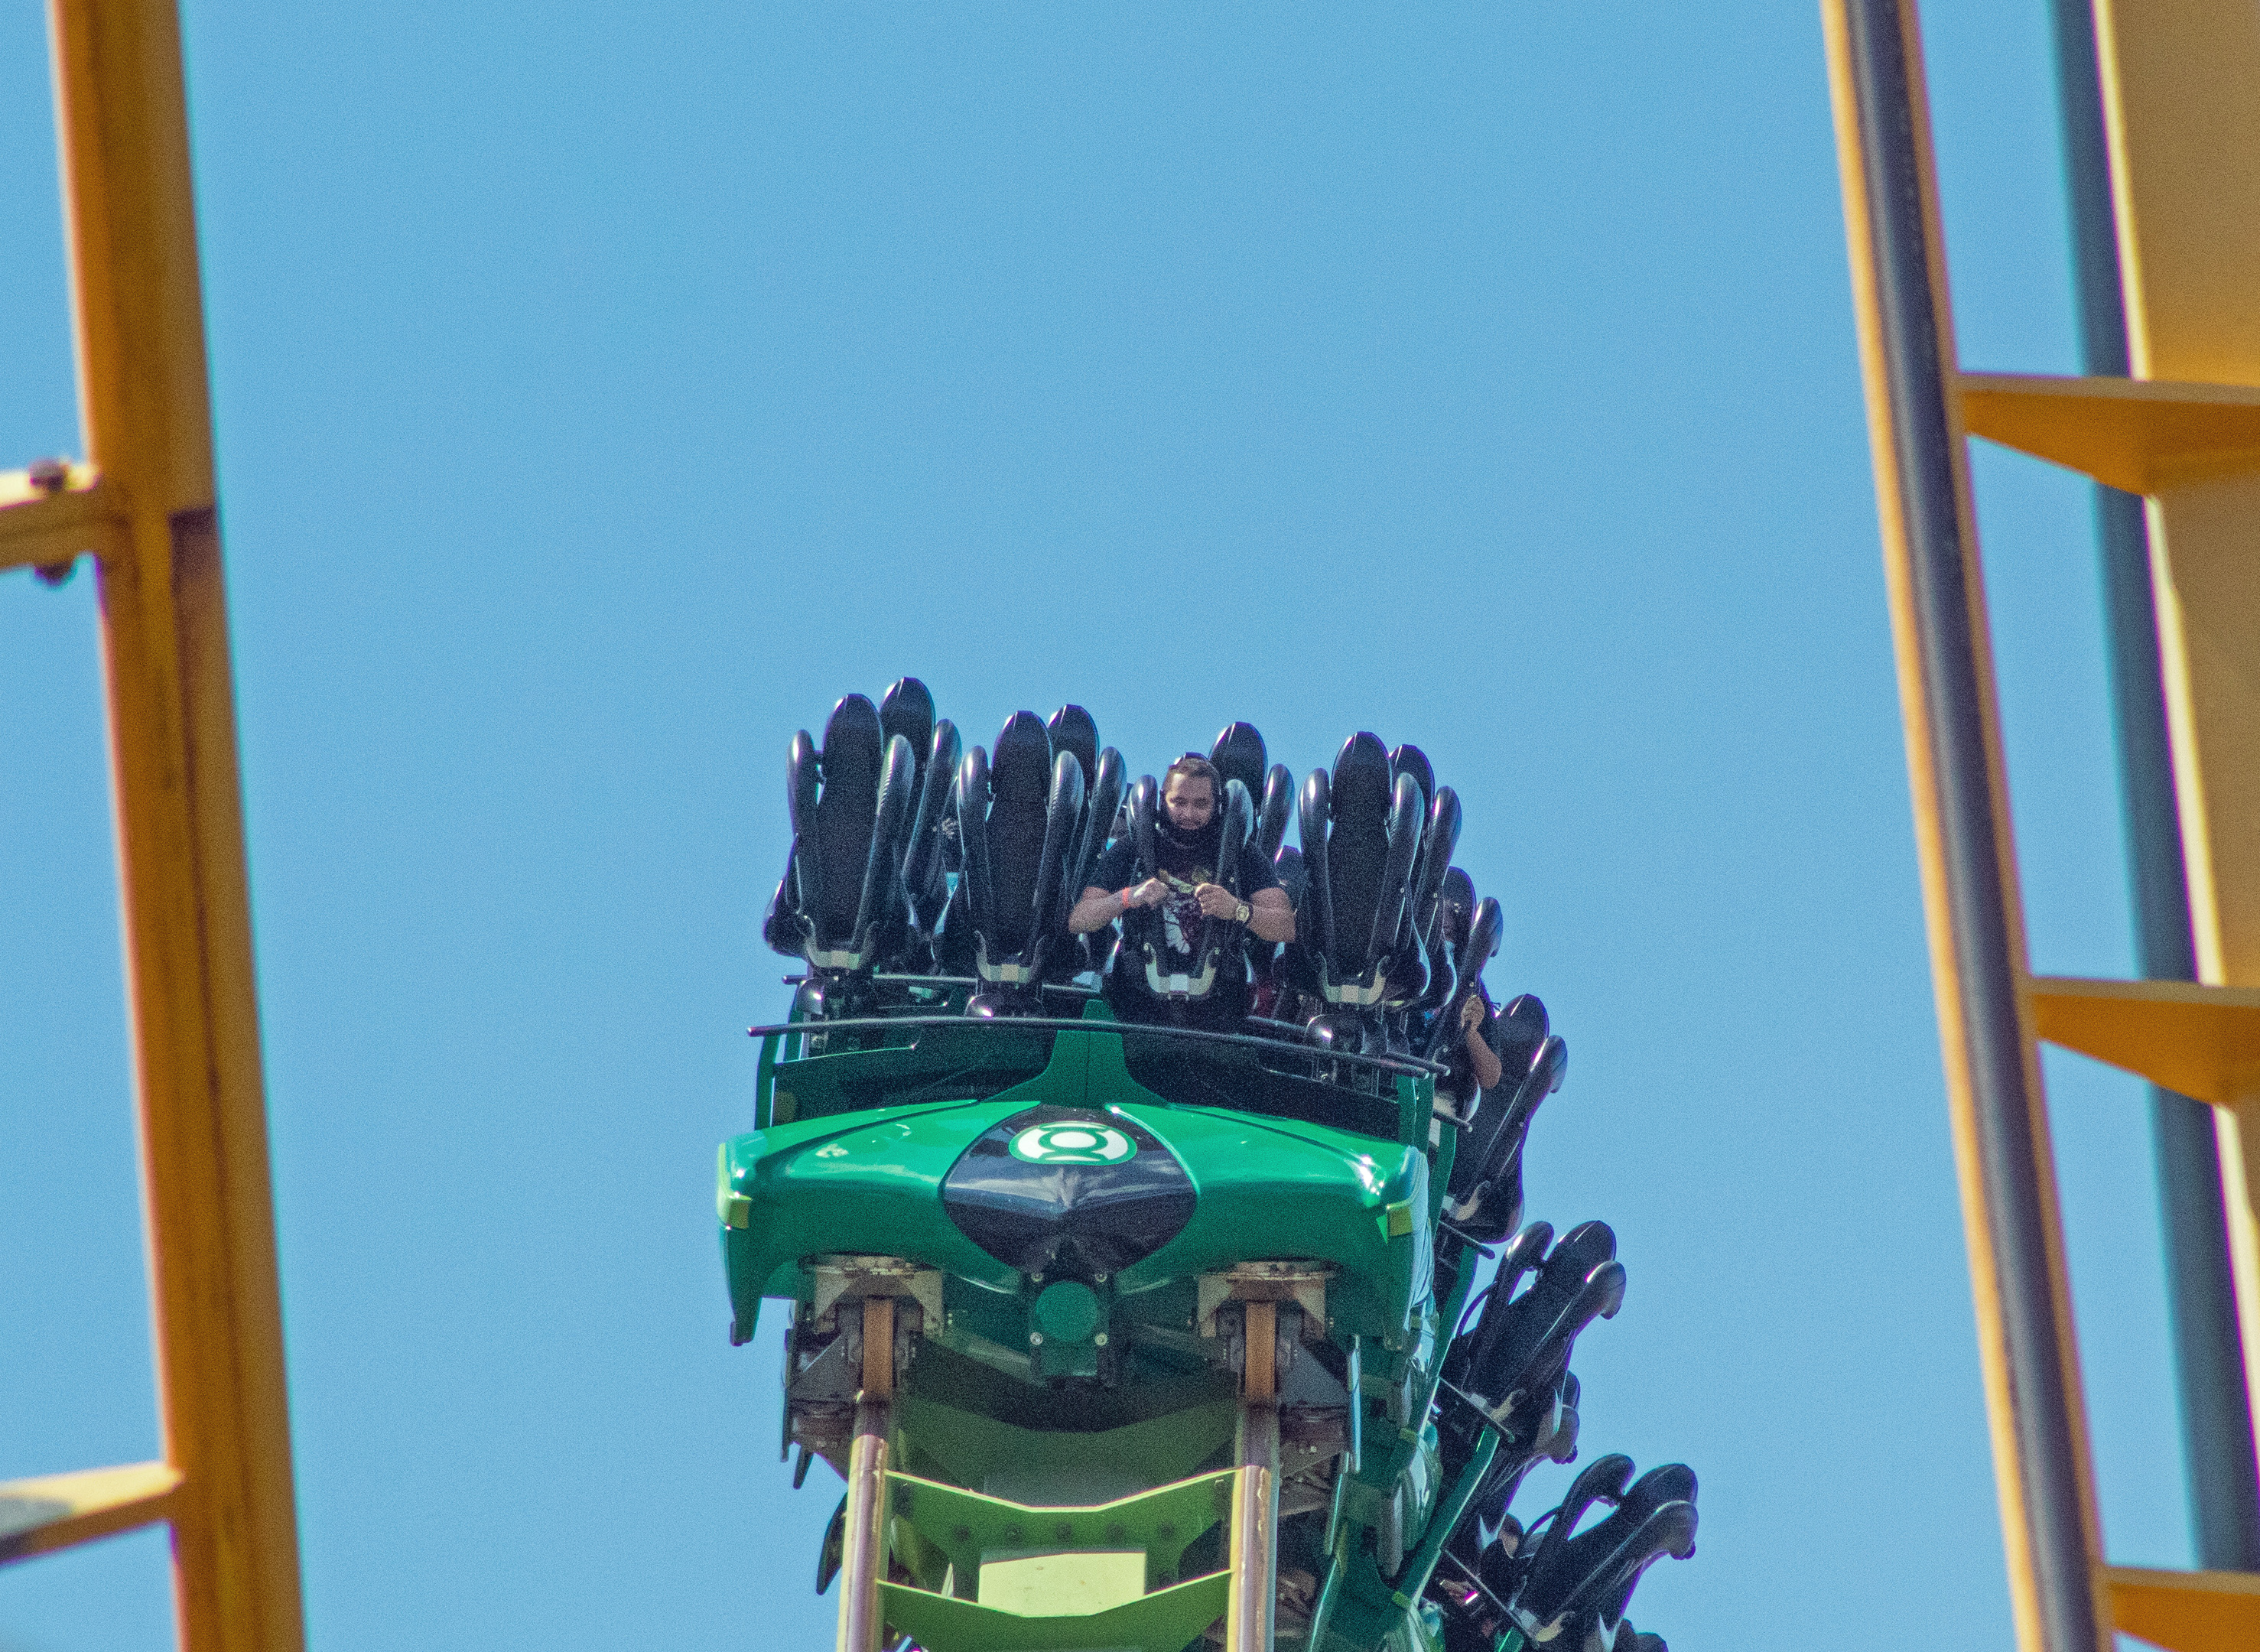 green lantern stand up roller coaster